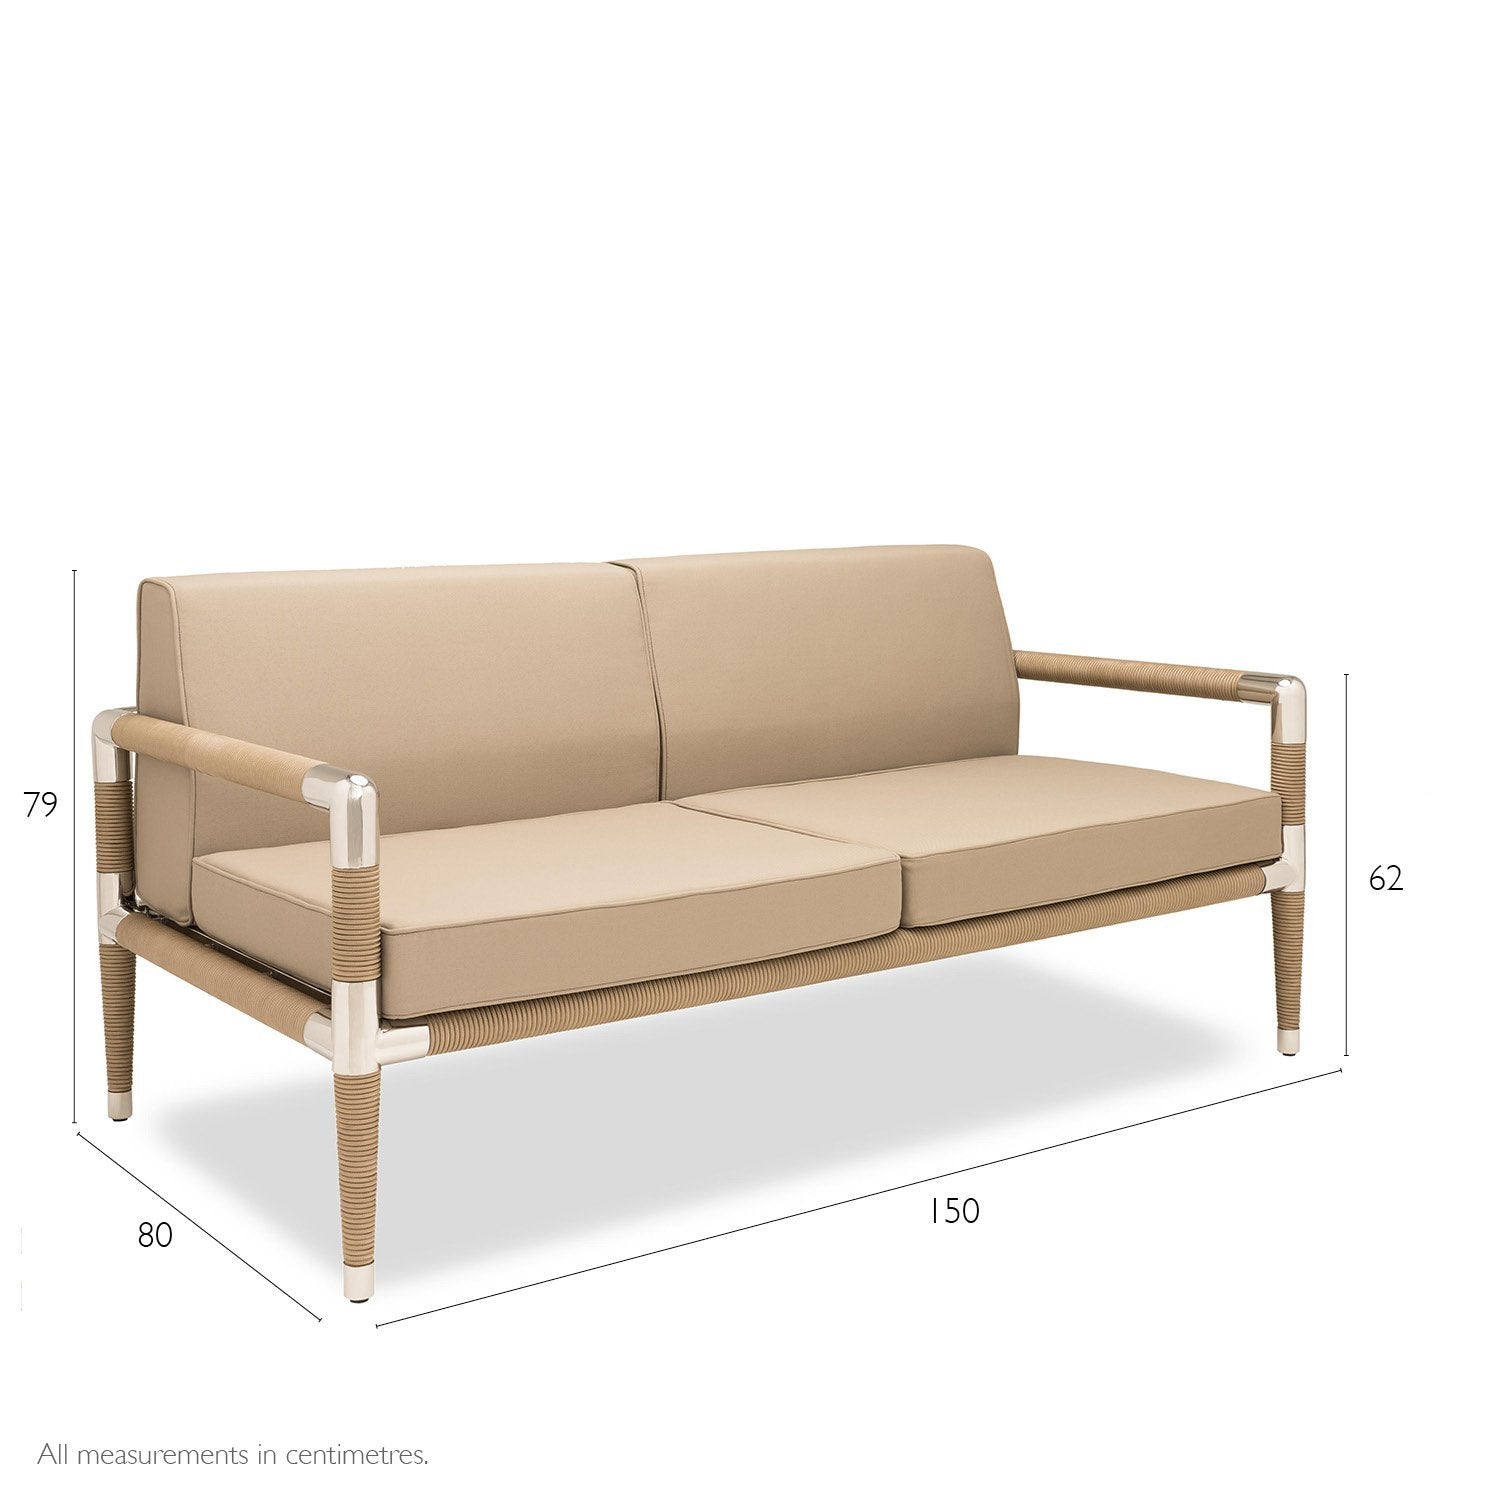 Marina 2 Seat Sofa - Teak dimensions